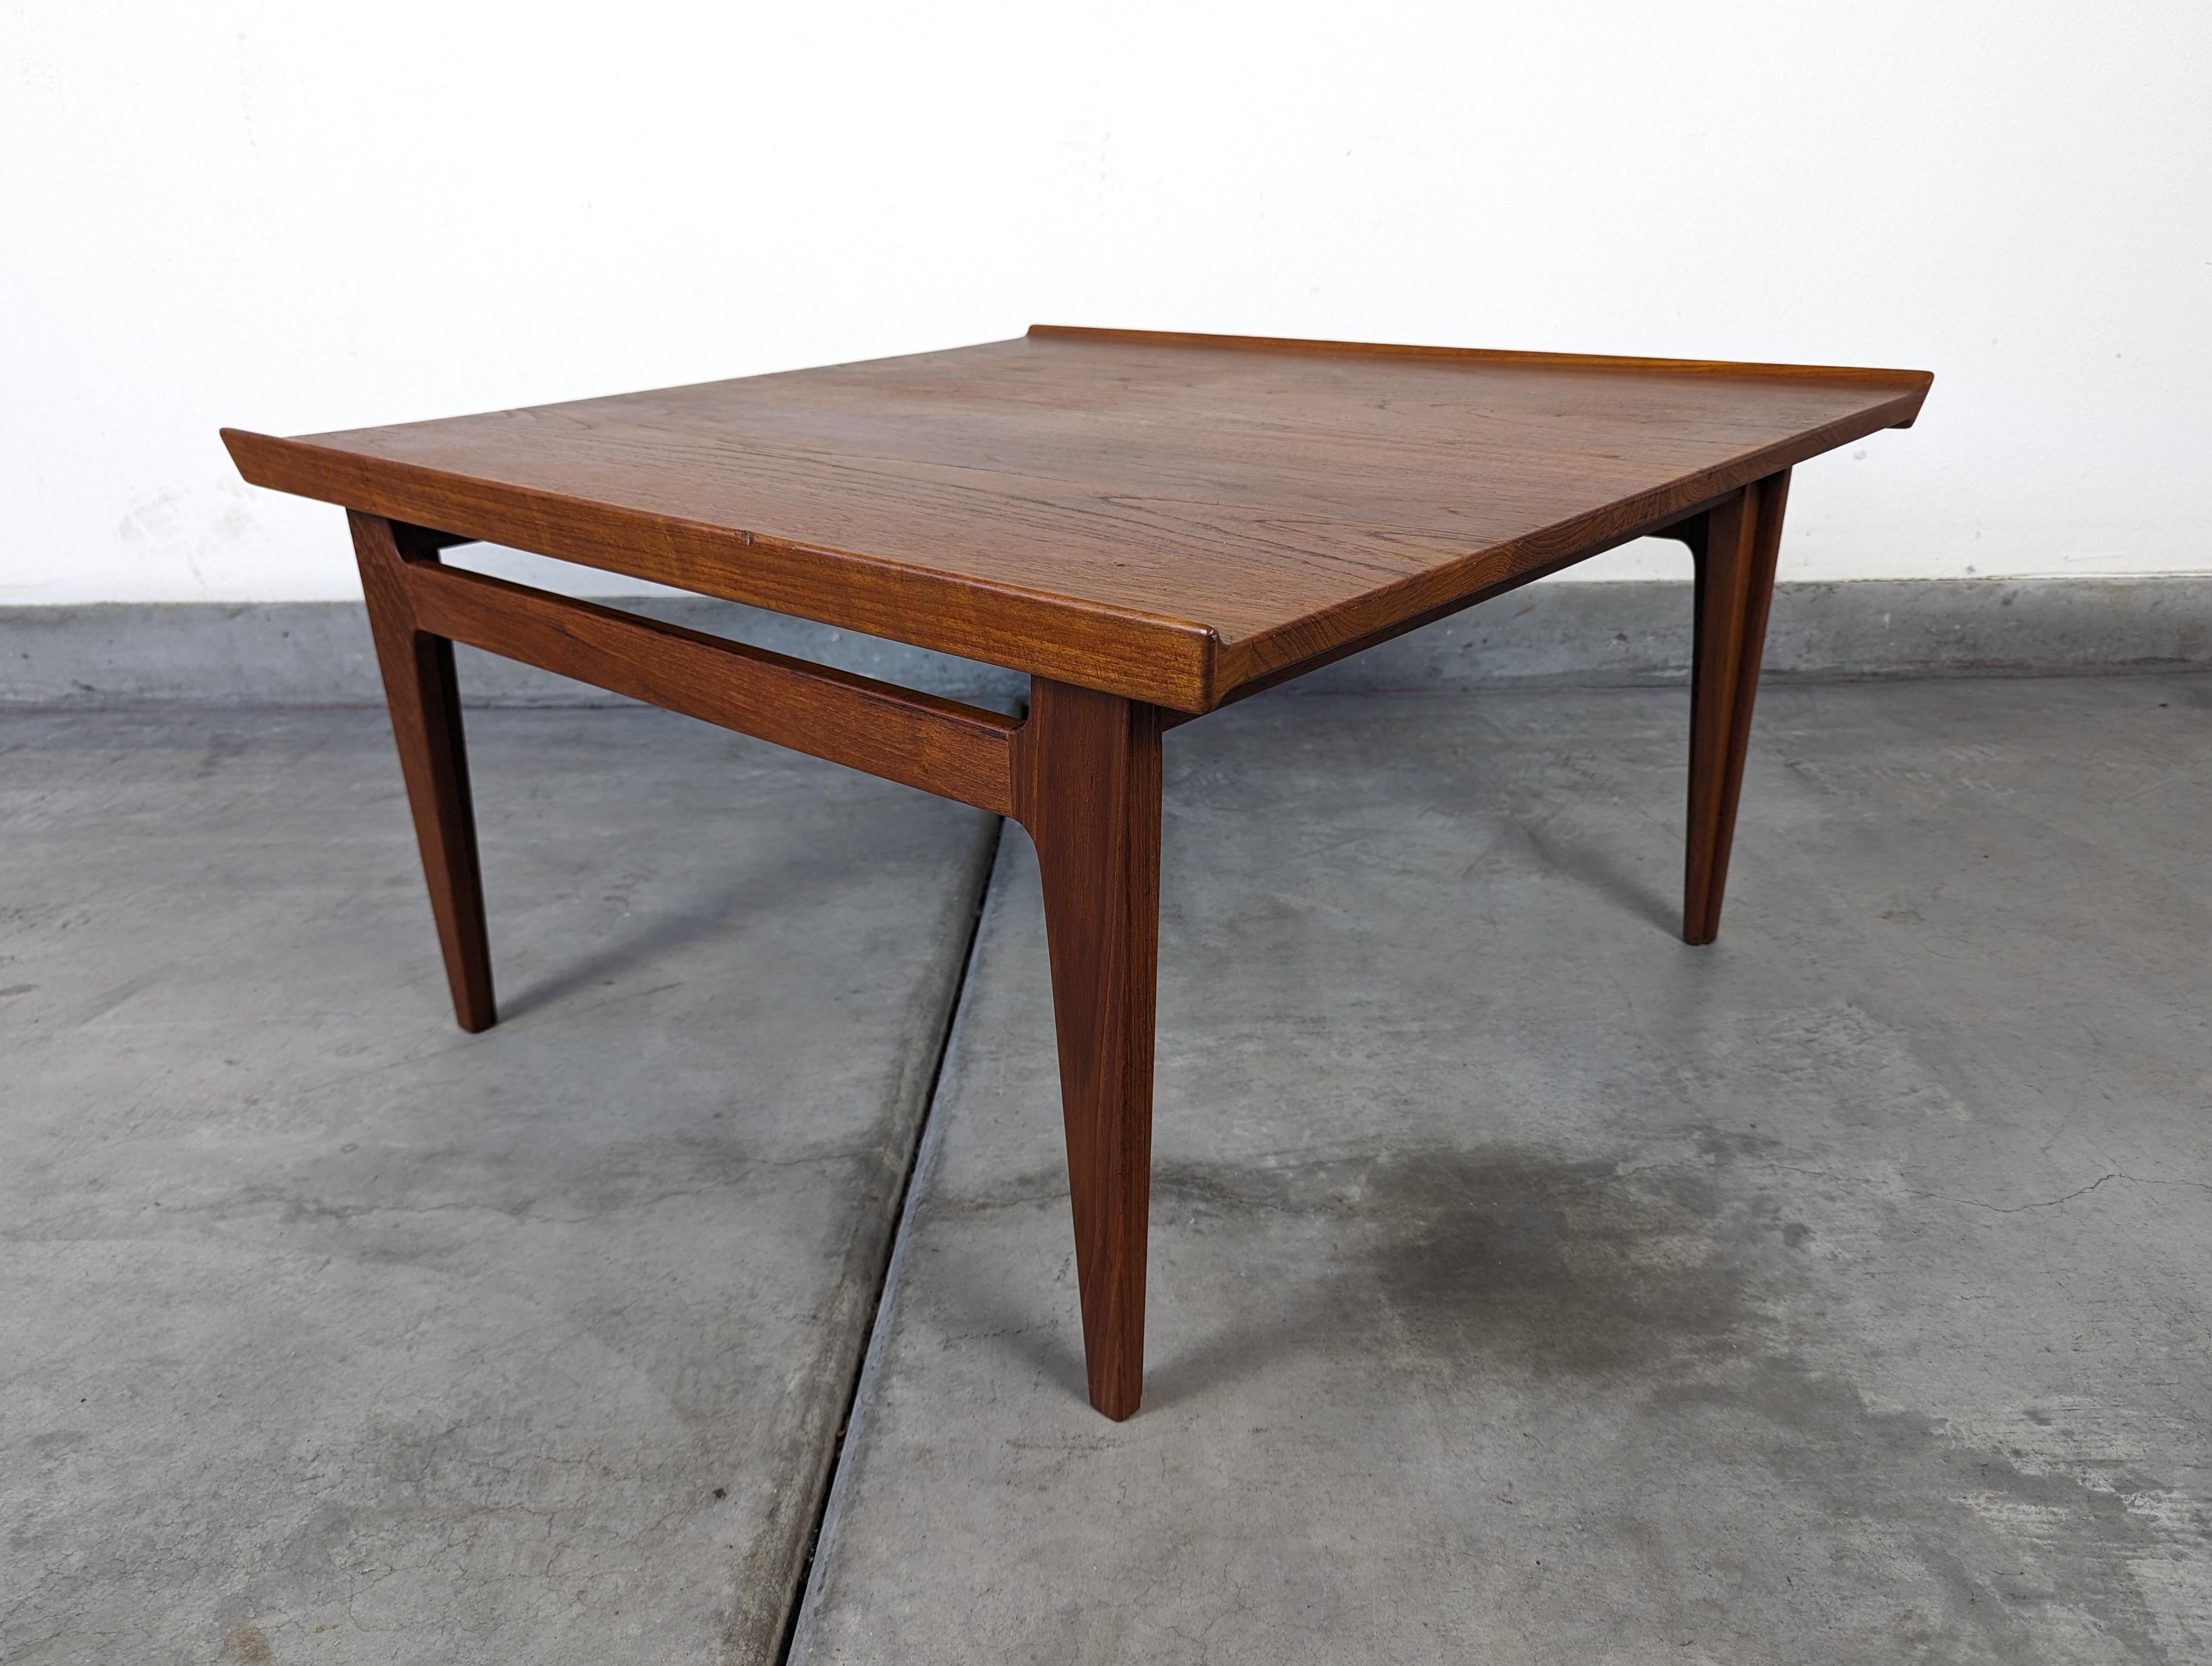 Mid-Century Modern Danish Solid Teak Mid Century Coffee Table by Finn Juhl for France & Søn, c1950s For Sale